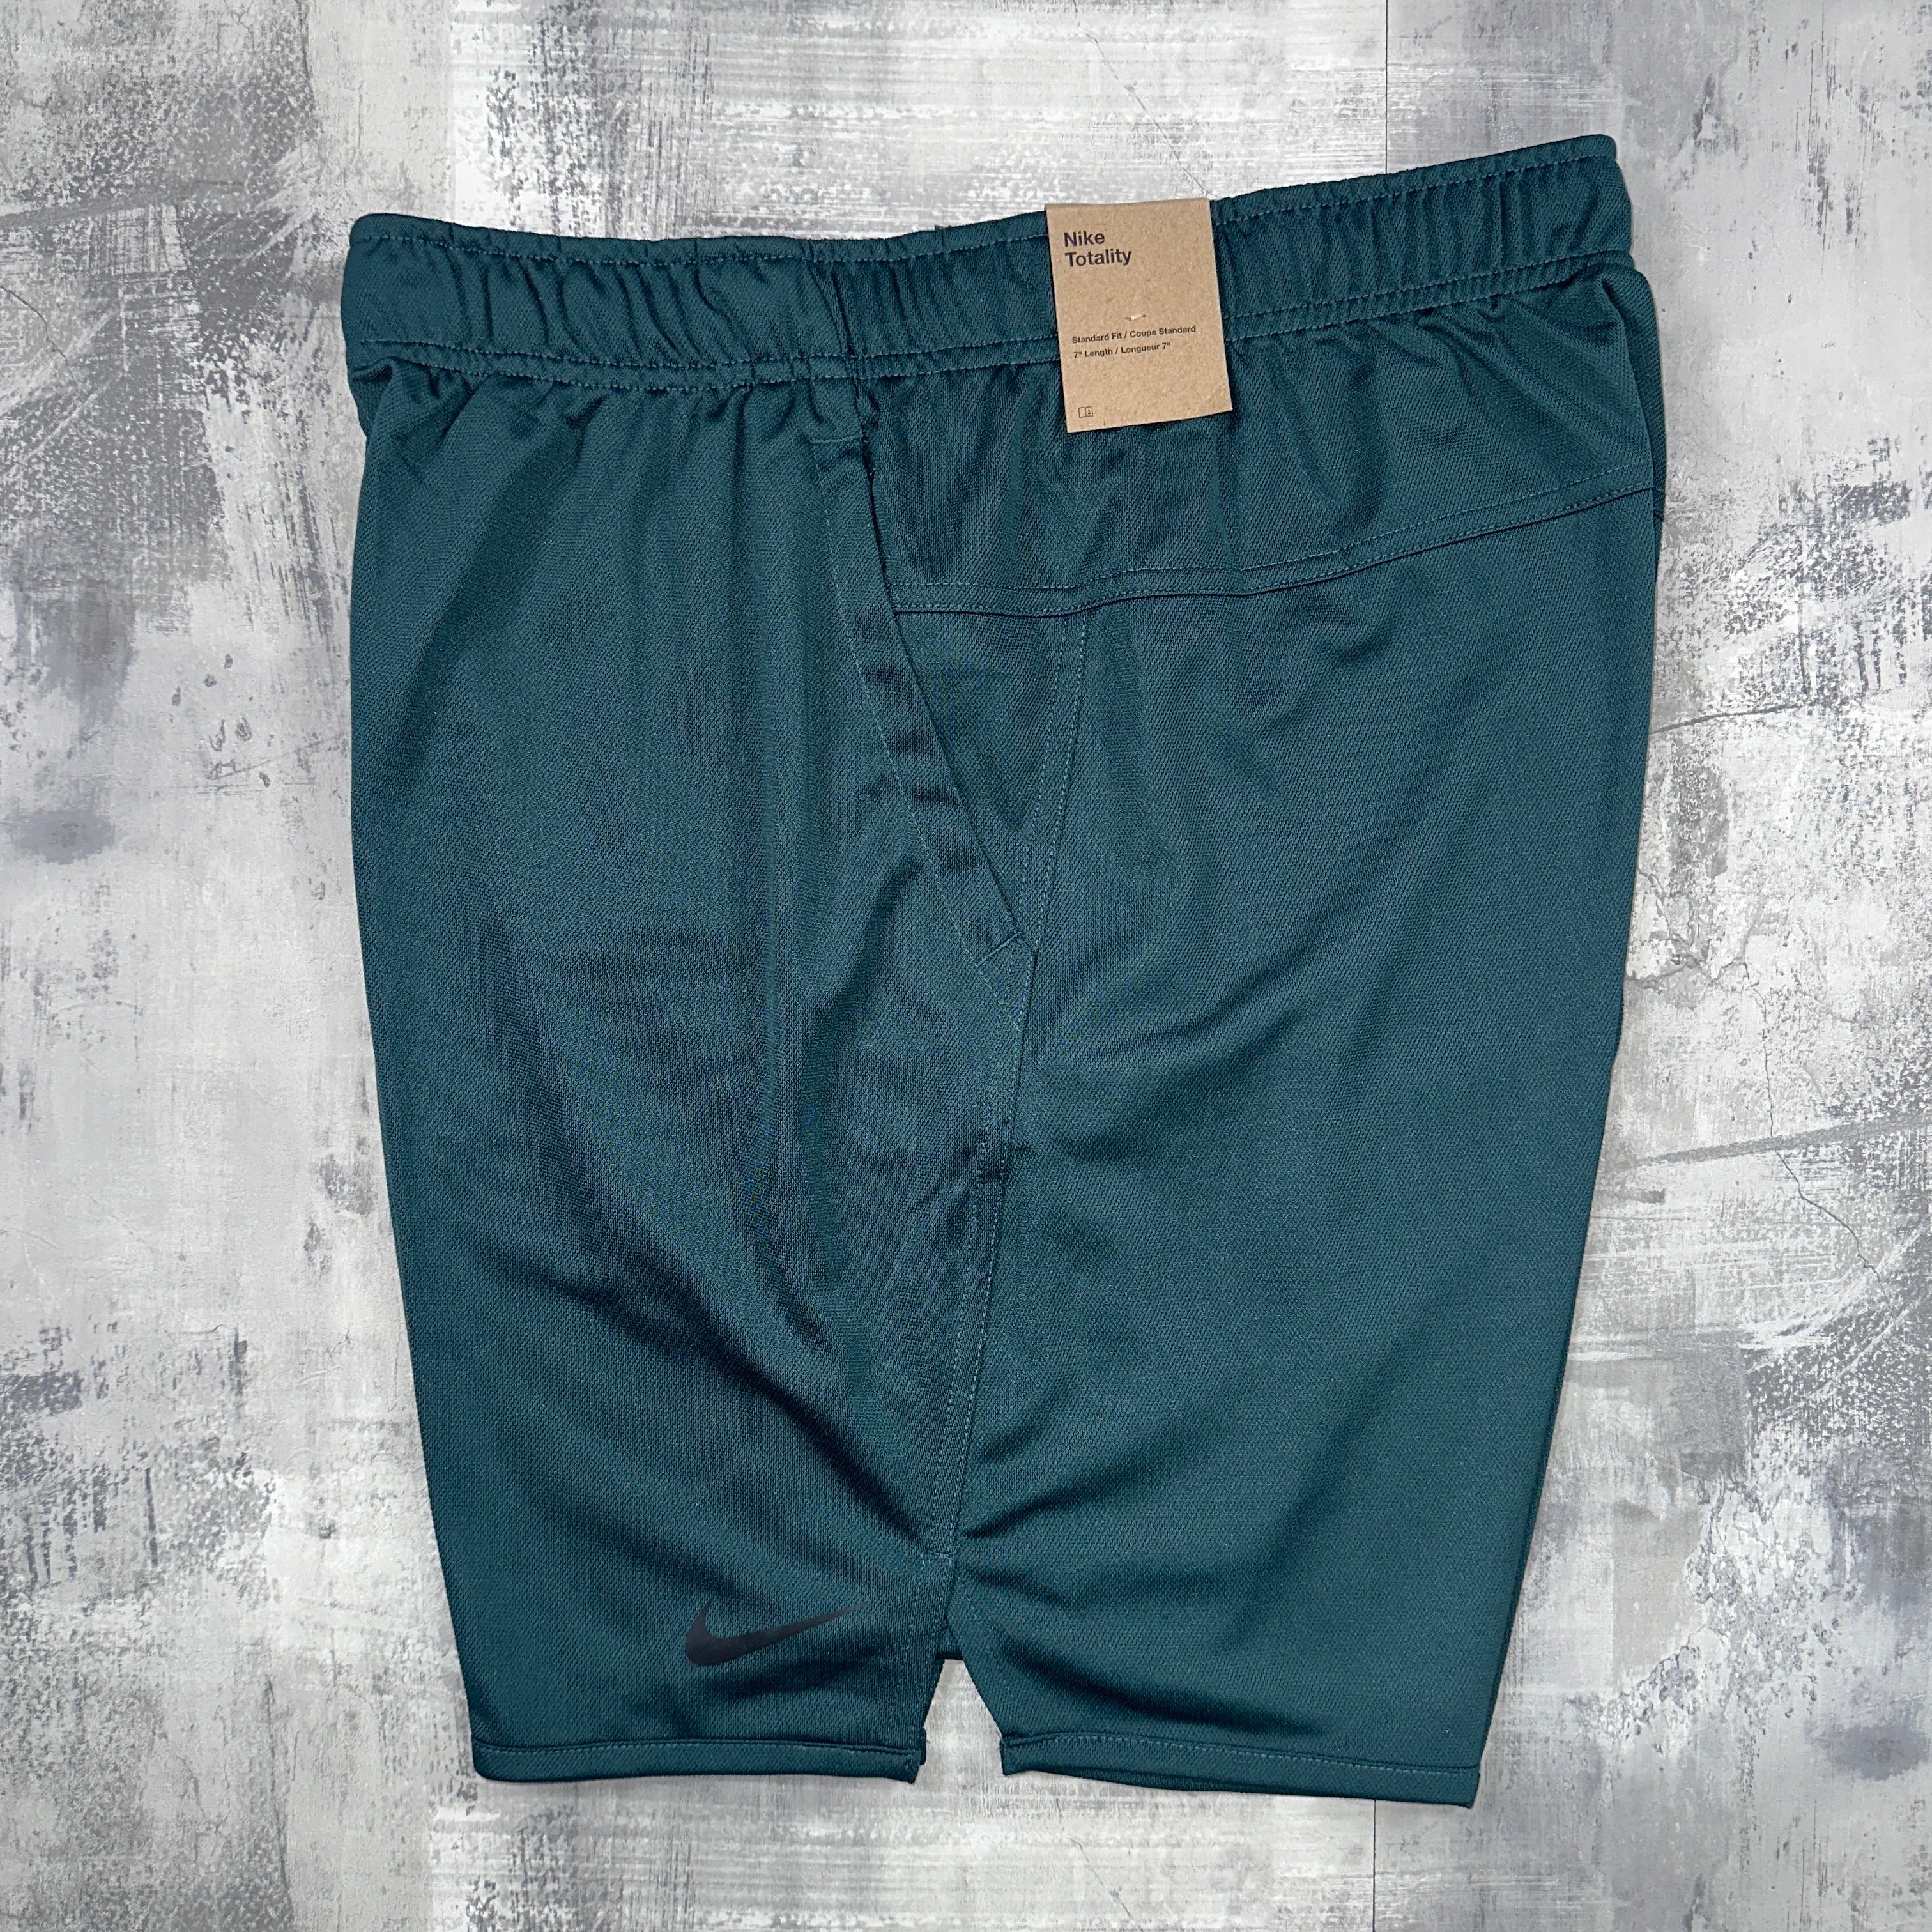 Nike Dri-Fit Stride shorts Jungle Green